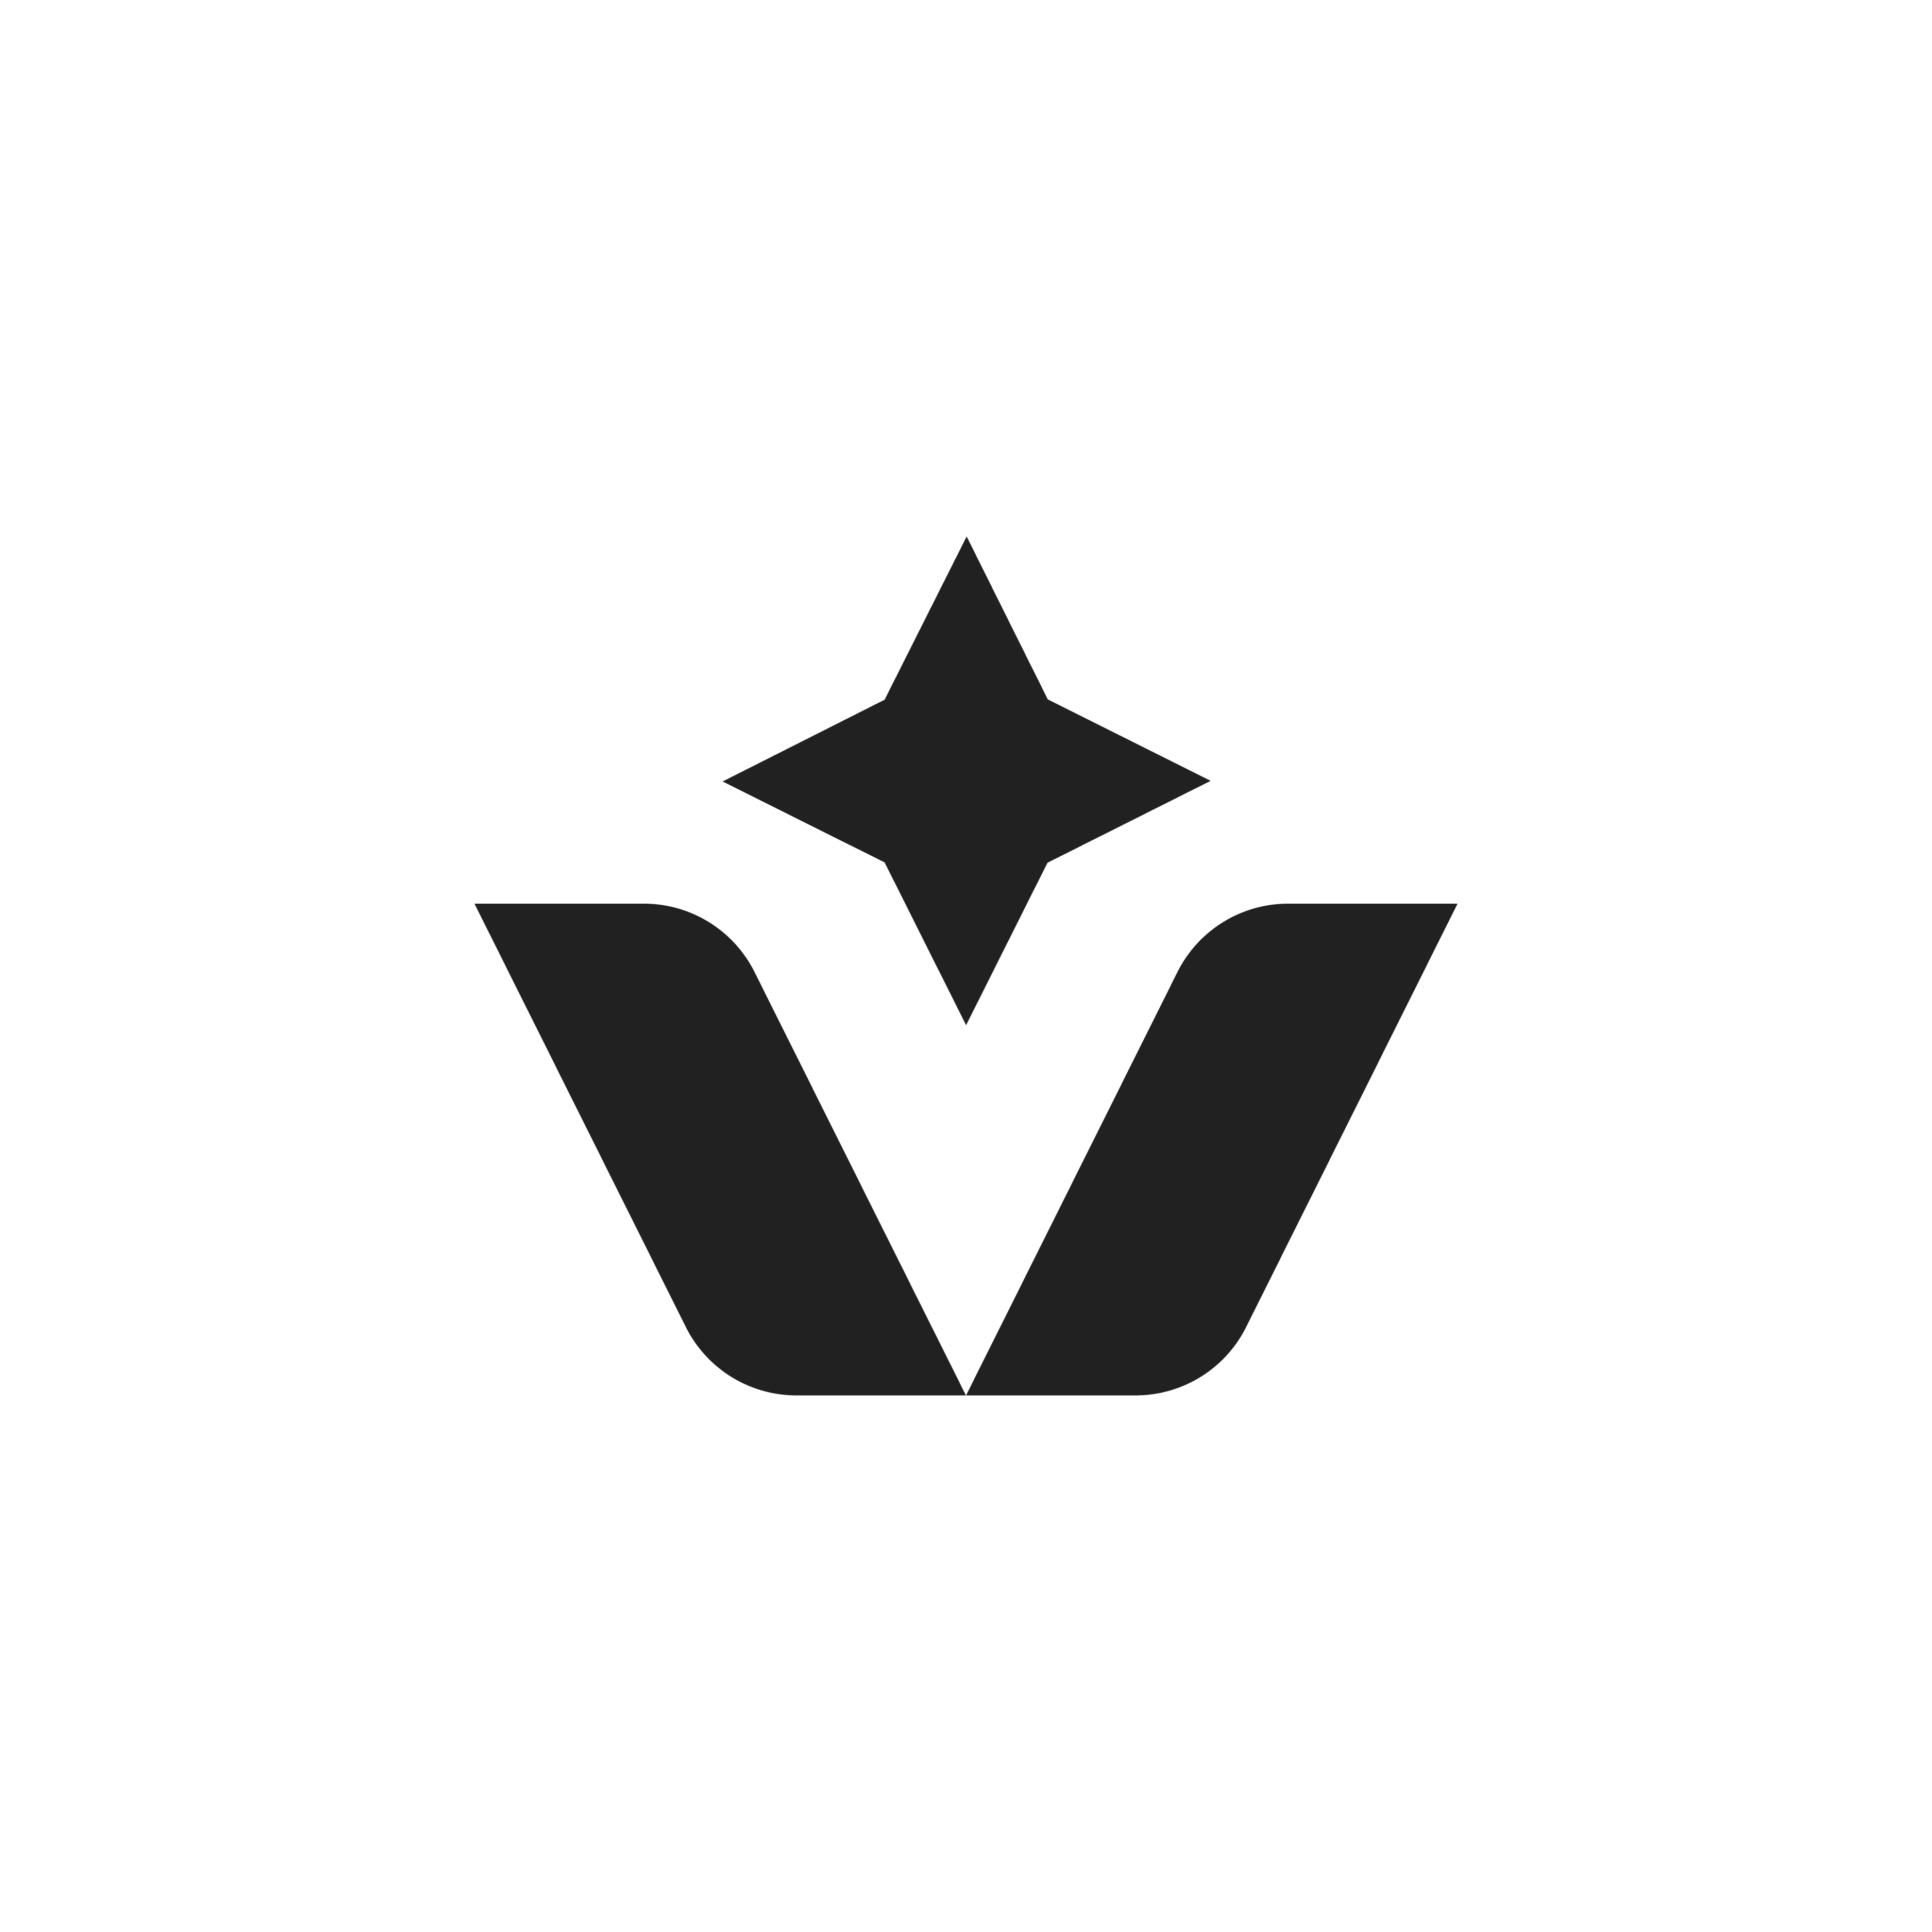 Letter V logo design by logo designer Francesco Bonetti for your inspiration and for the worlds largest logo competition